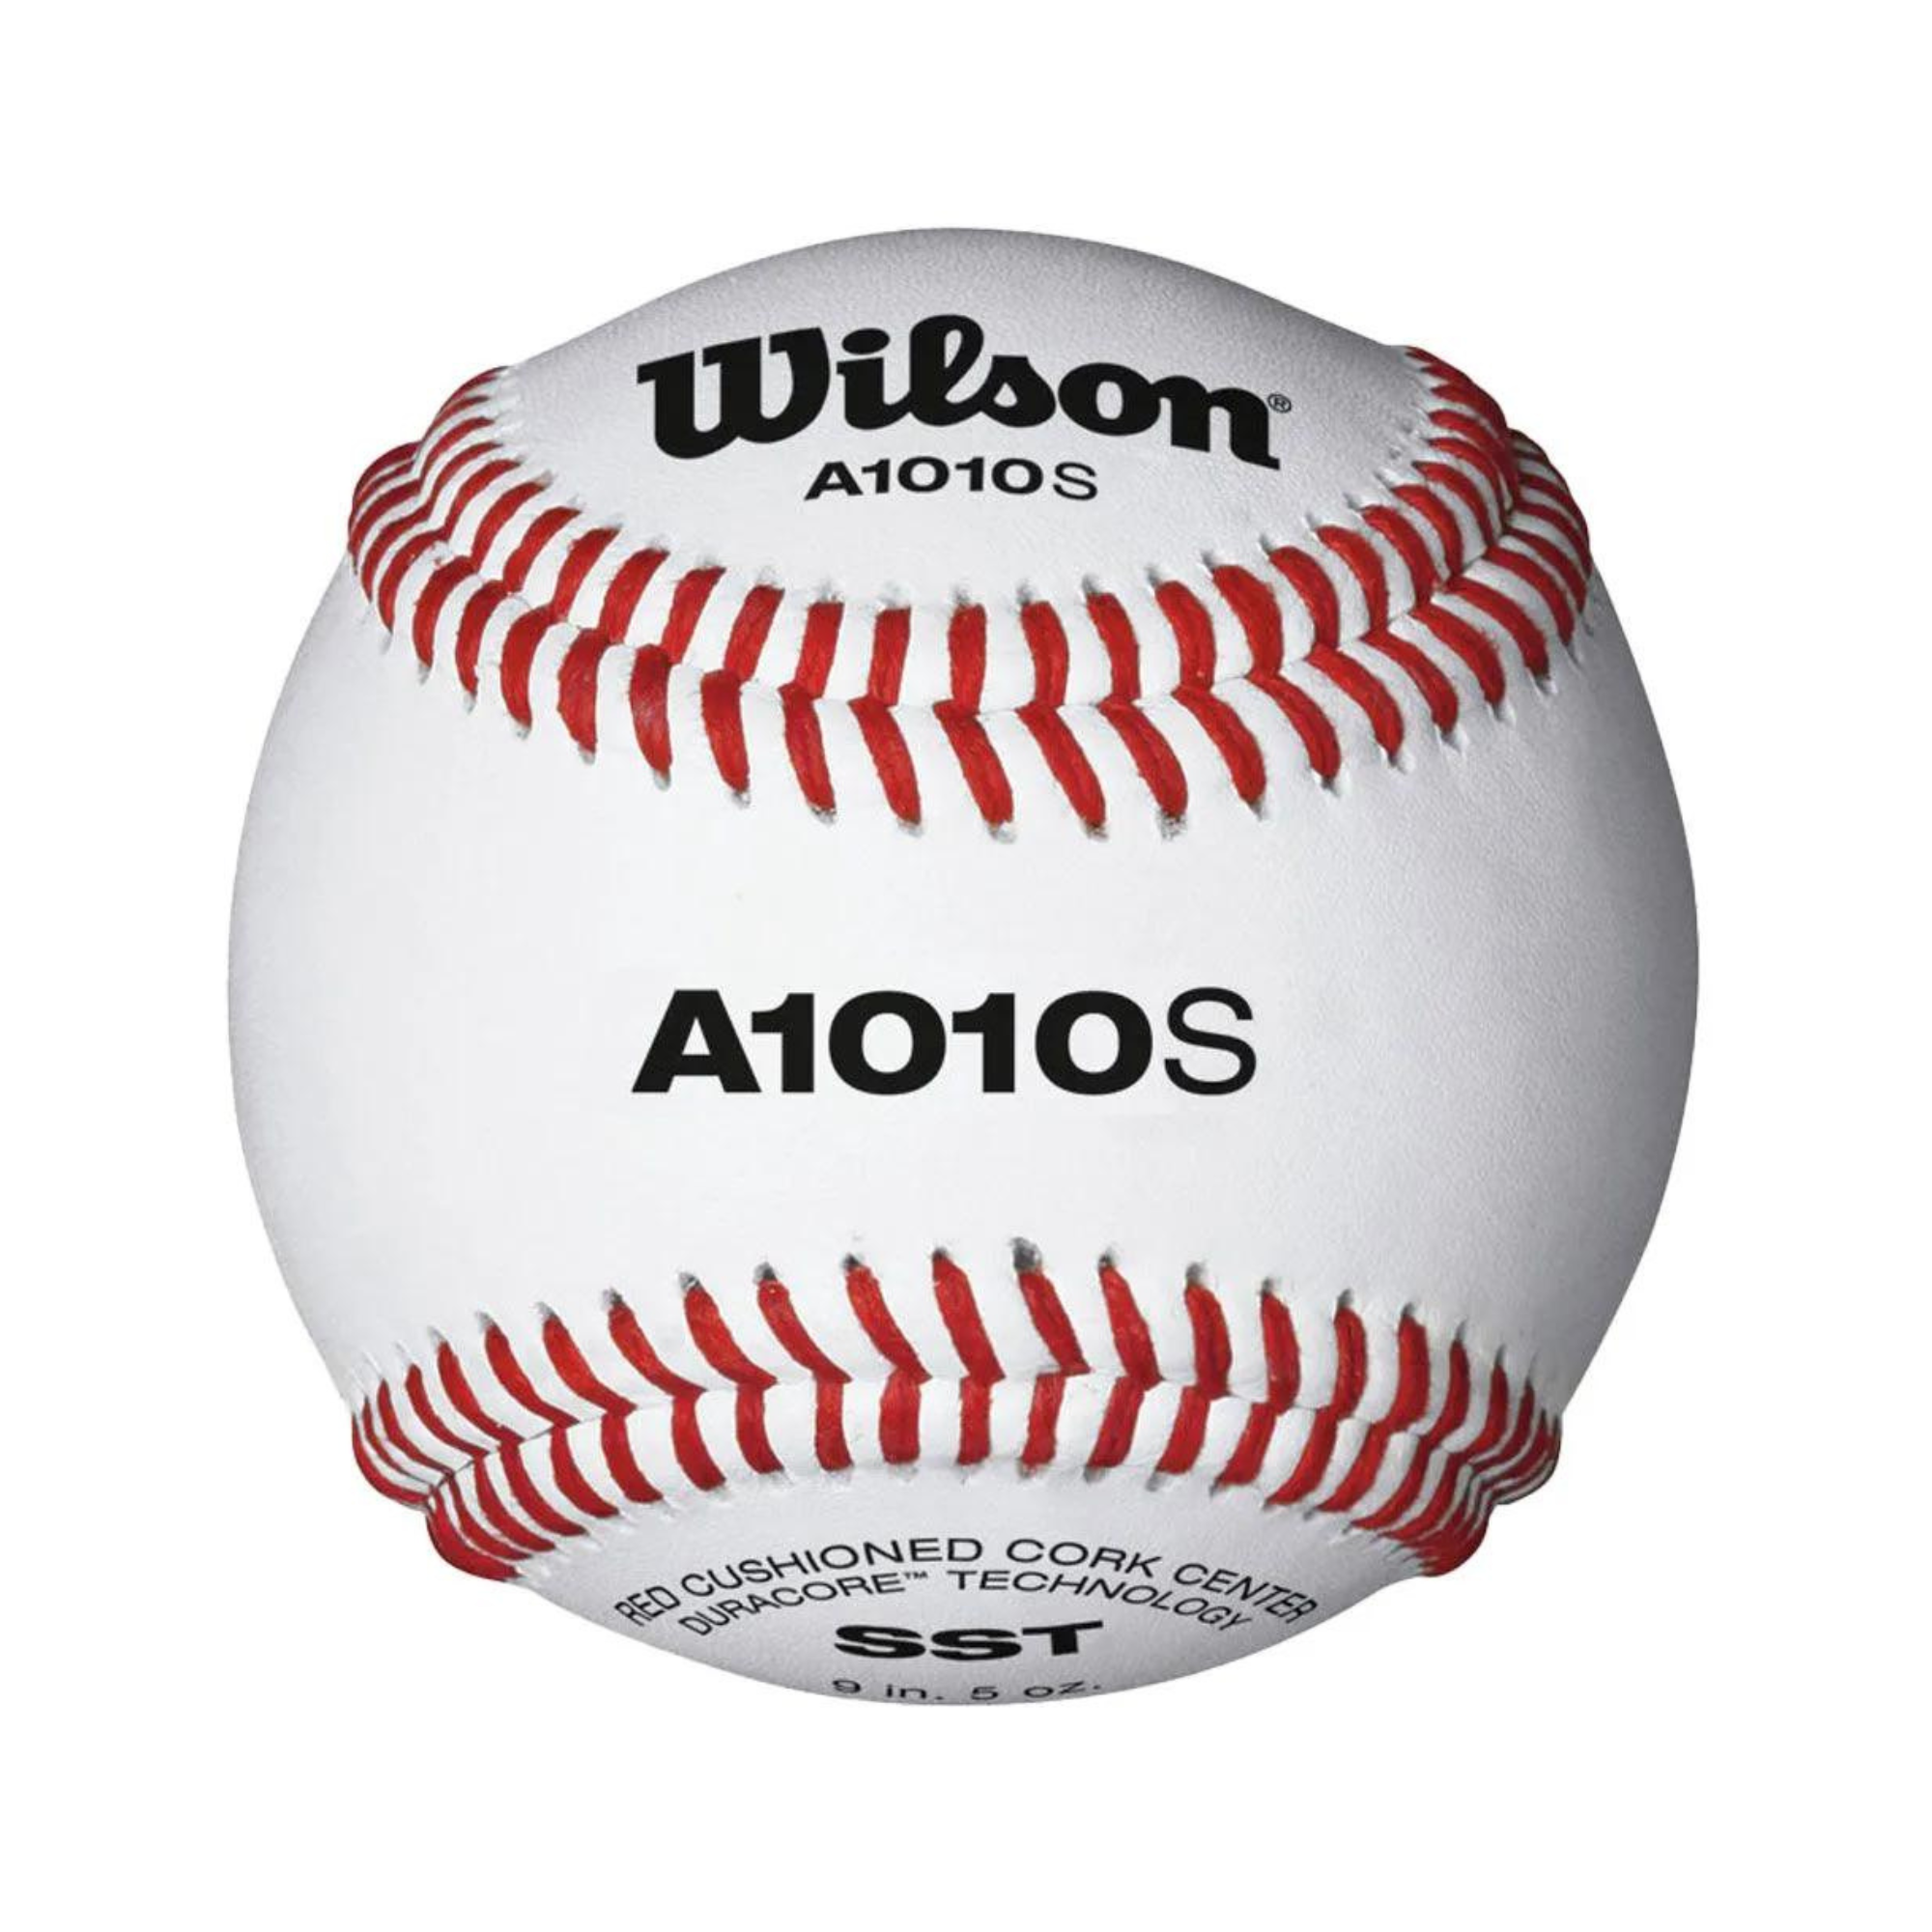 Wilson A1010S Baseball (Dozen)